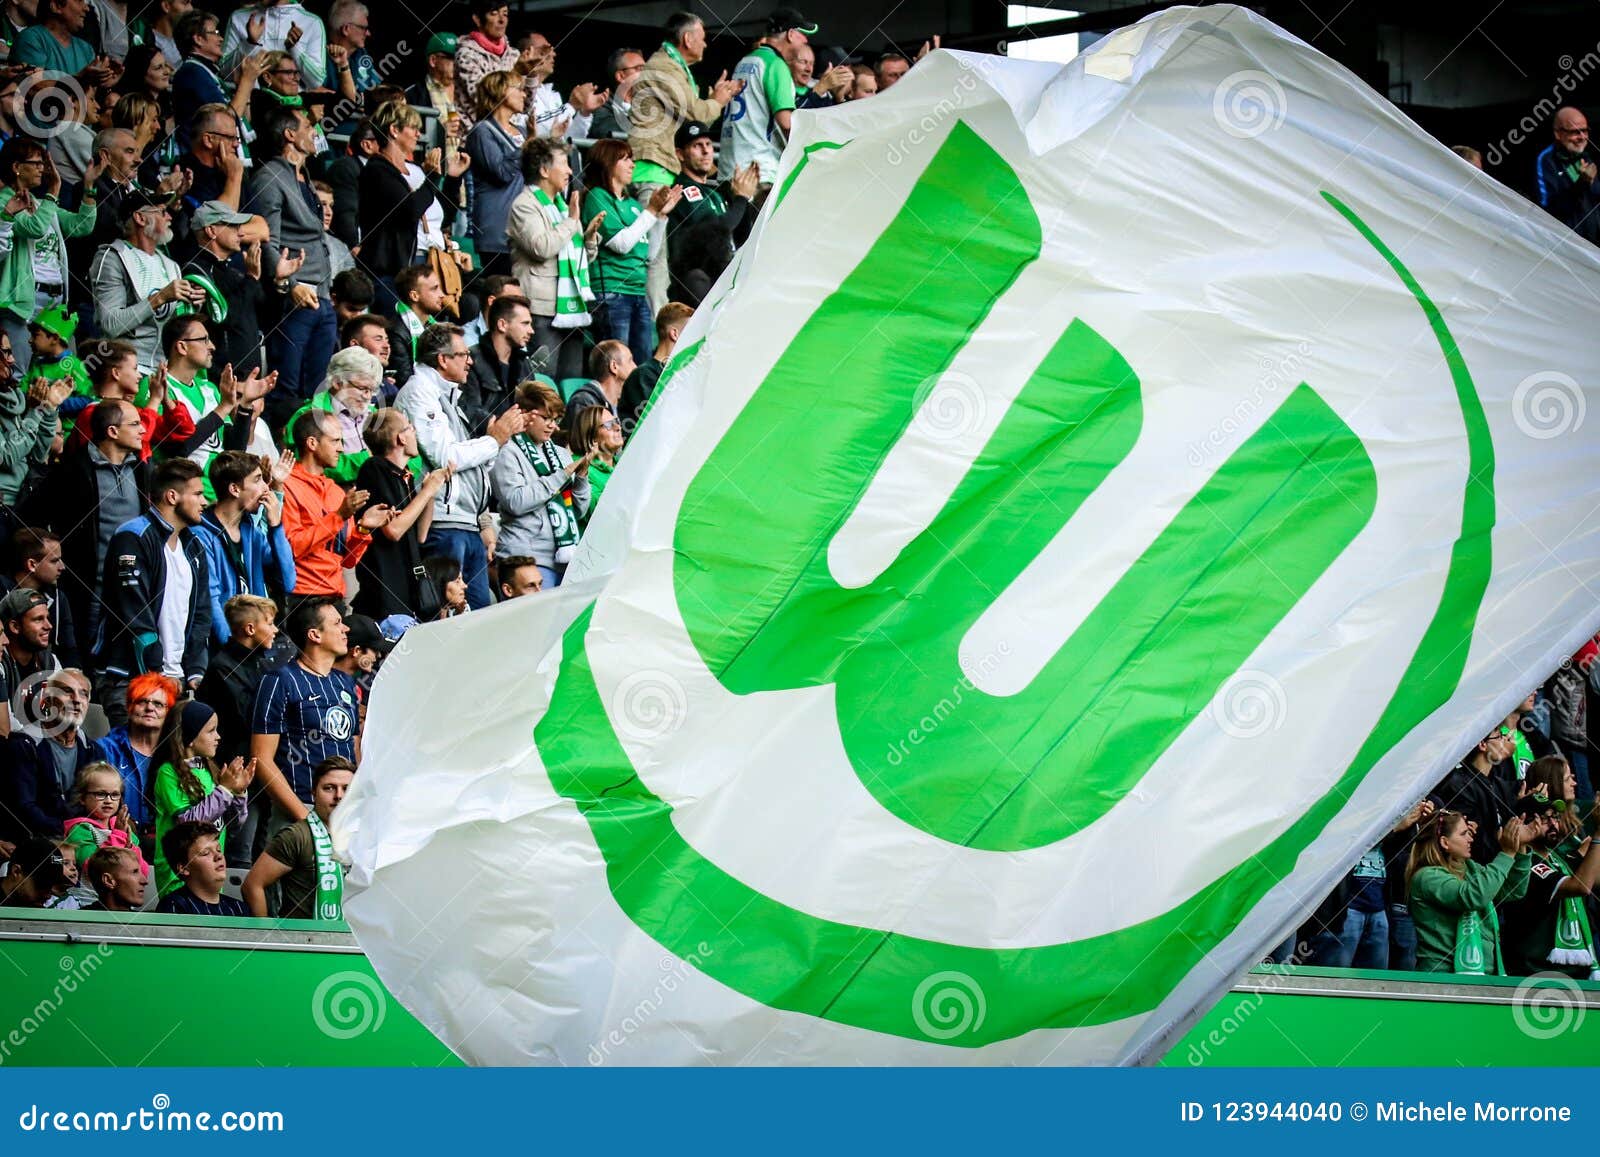 Flag Around the VfL Wolfsburg Fans during a Bundesliga Match Editorial Image - Image of club, premier: 123944040